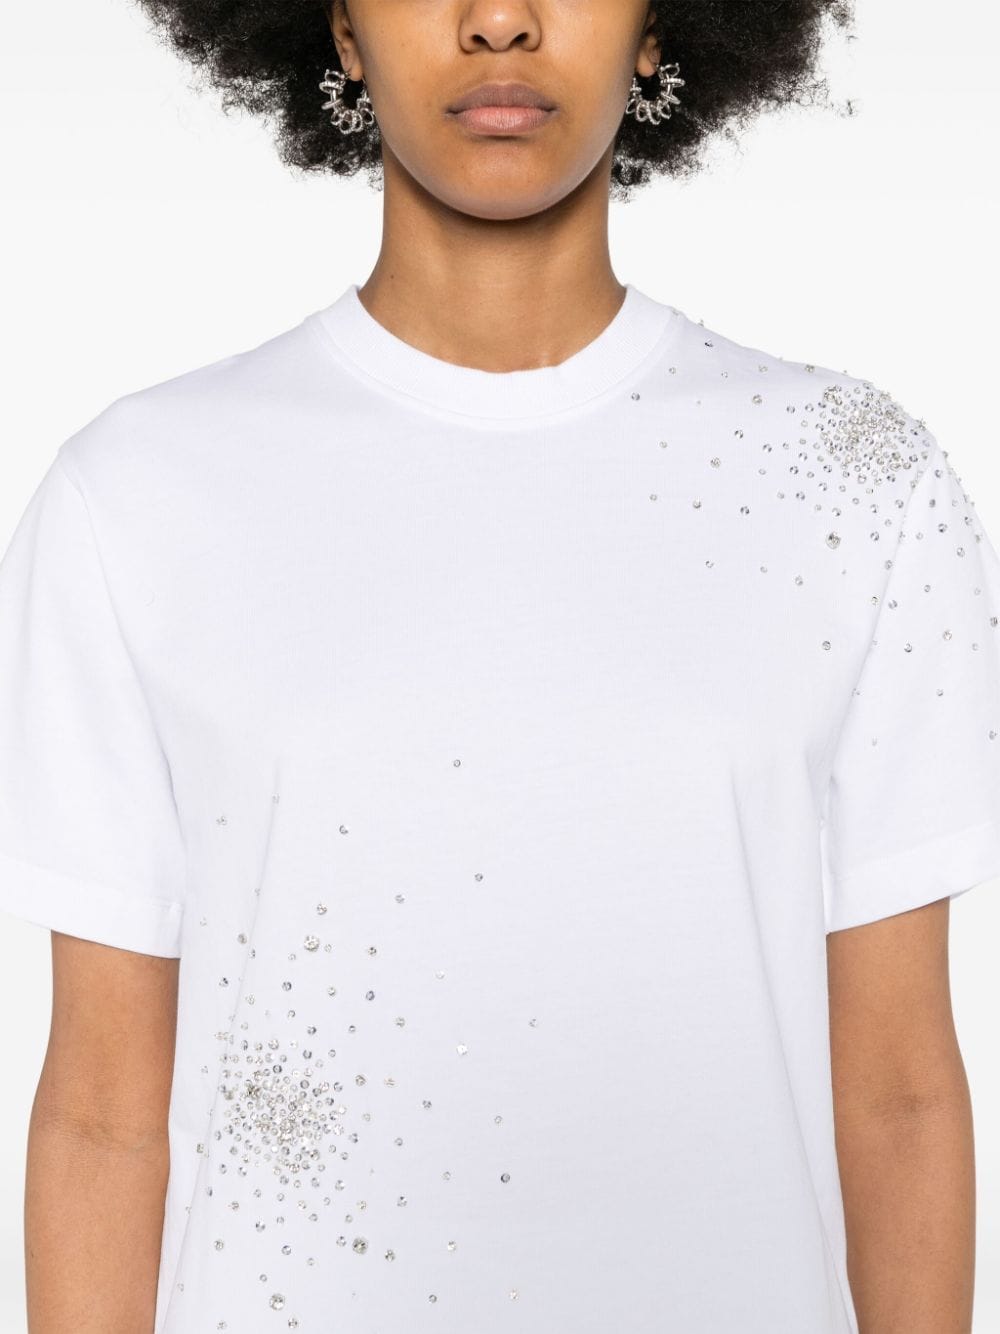 DES PHEMMES T-shirt verfraaid met kristallen Wit